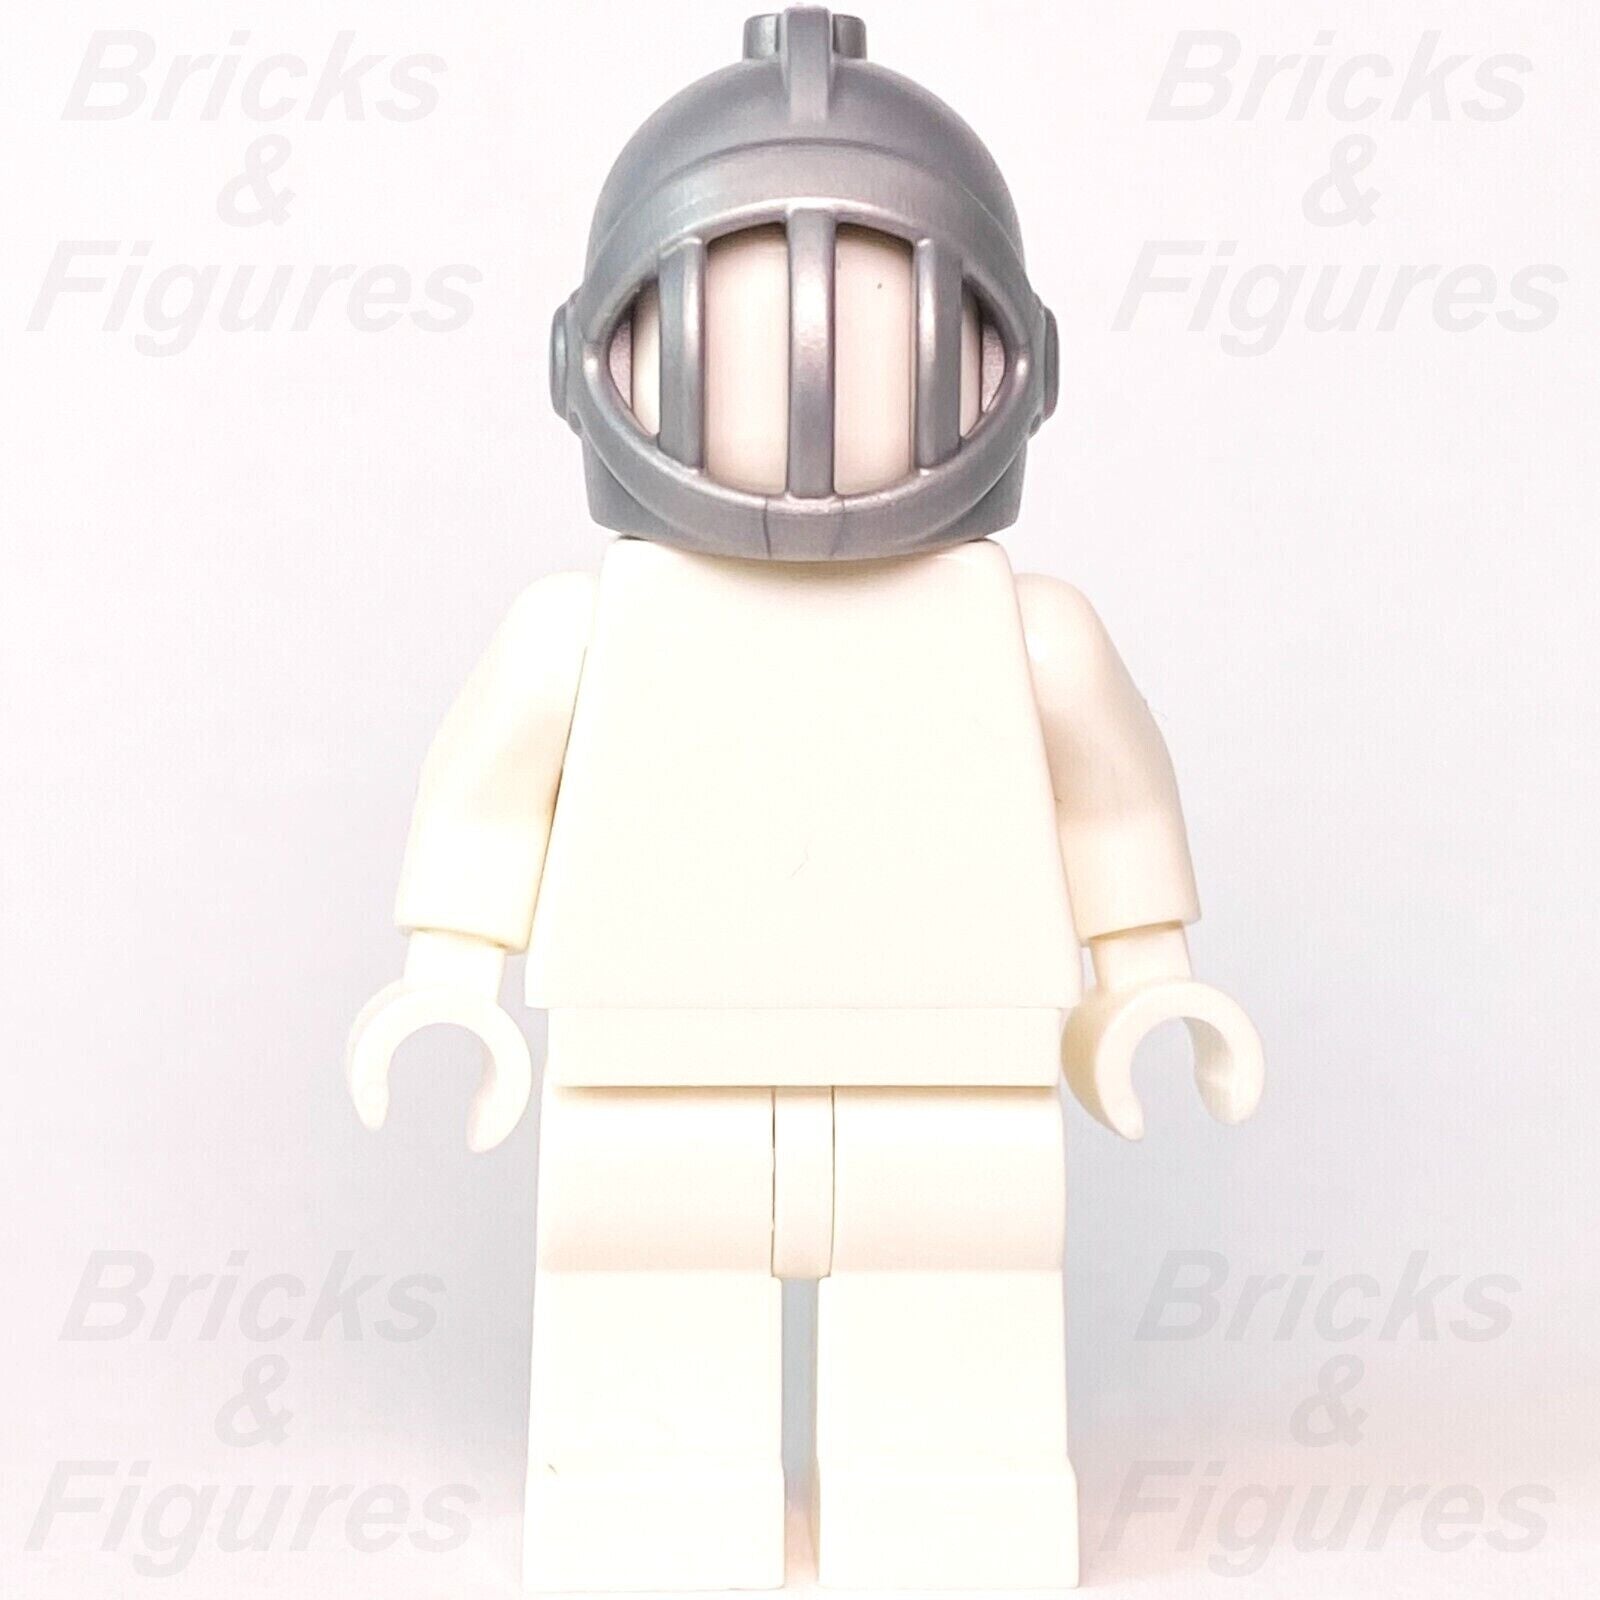 LEGO Castle Knight Fixed Face Grille Helmet Minifigure Part X167 59858 4503 New - Bricks & Figures